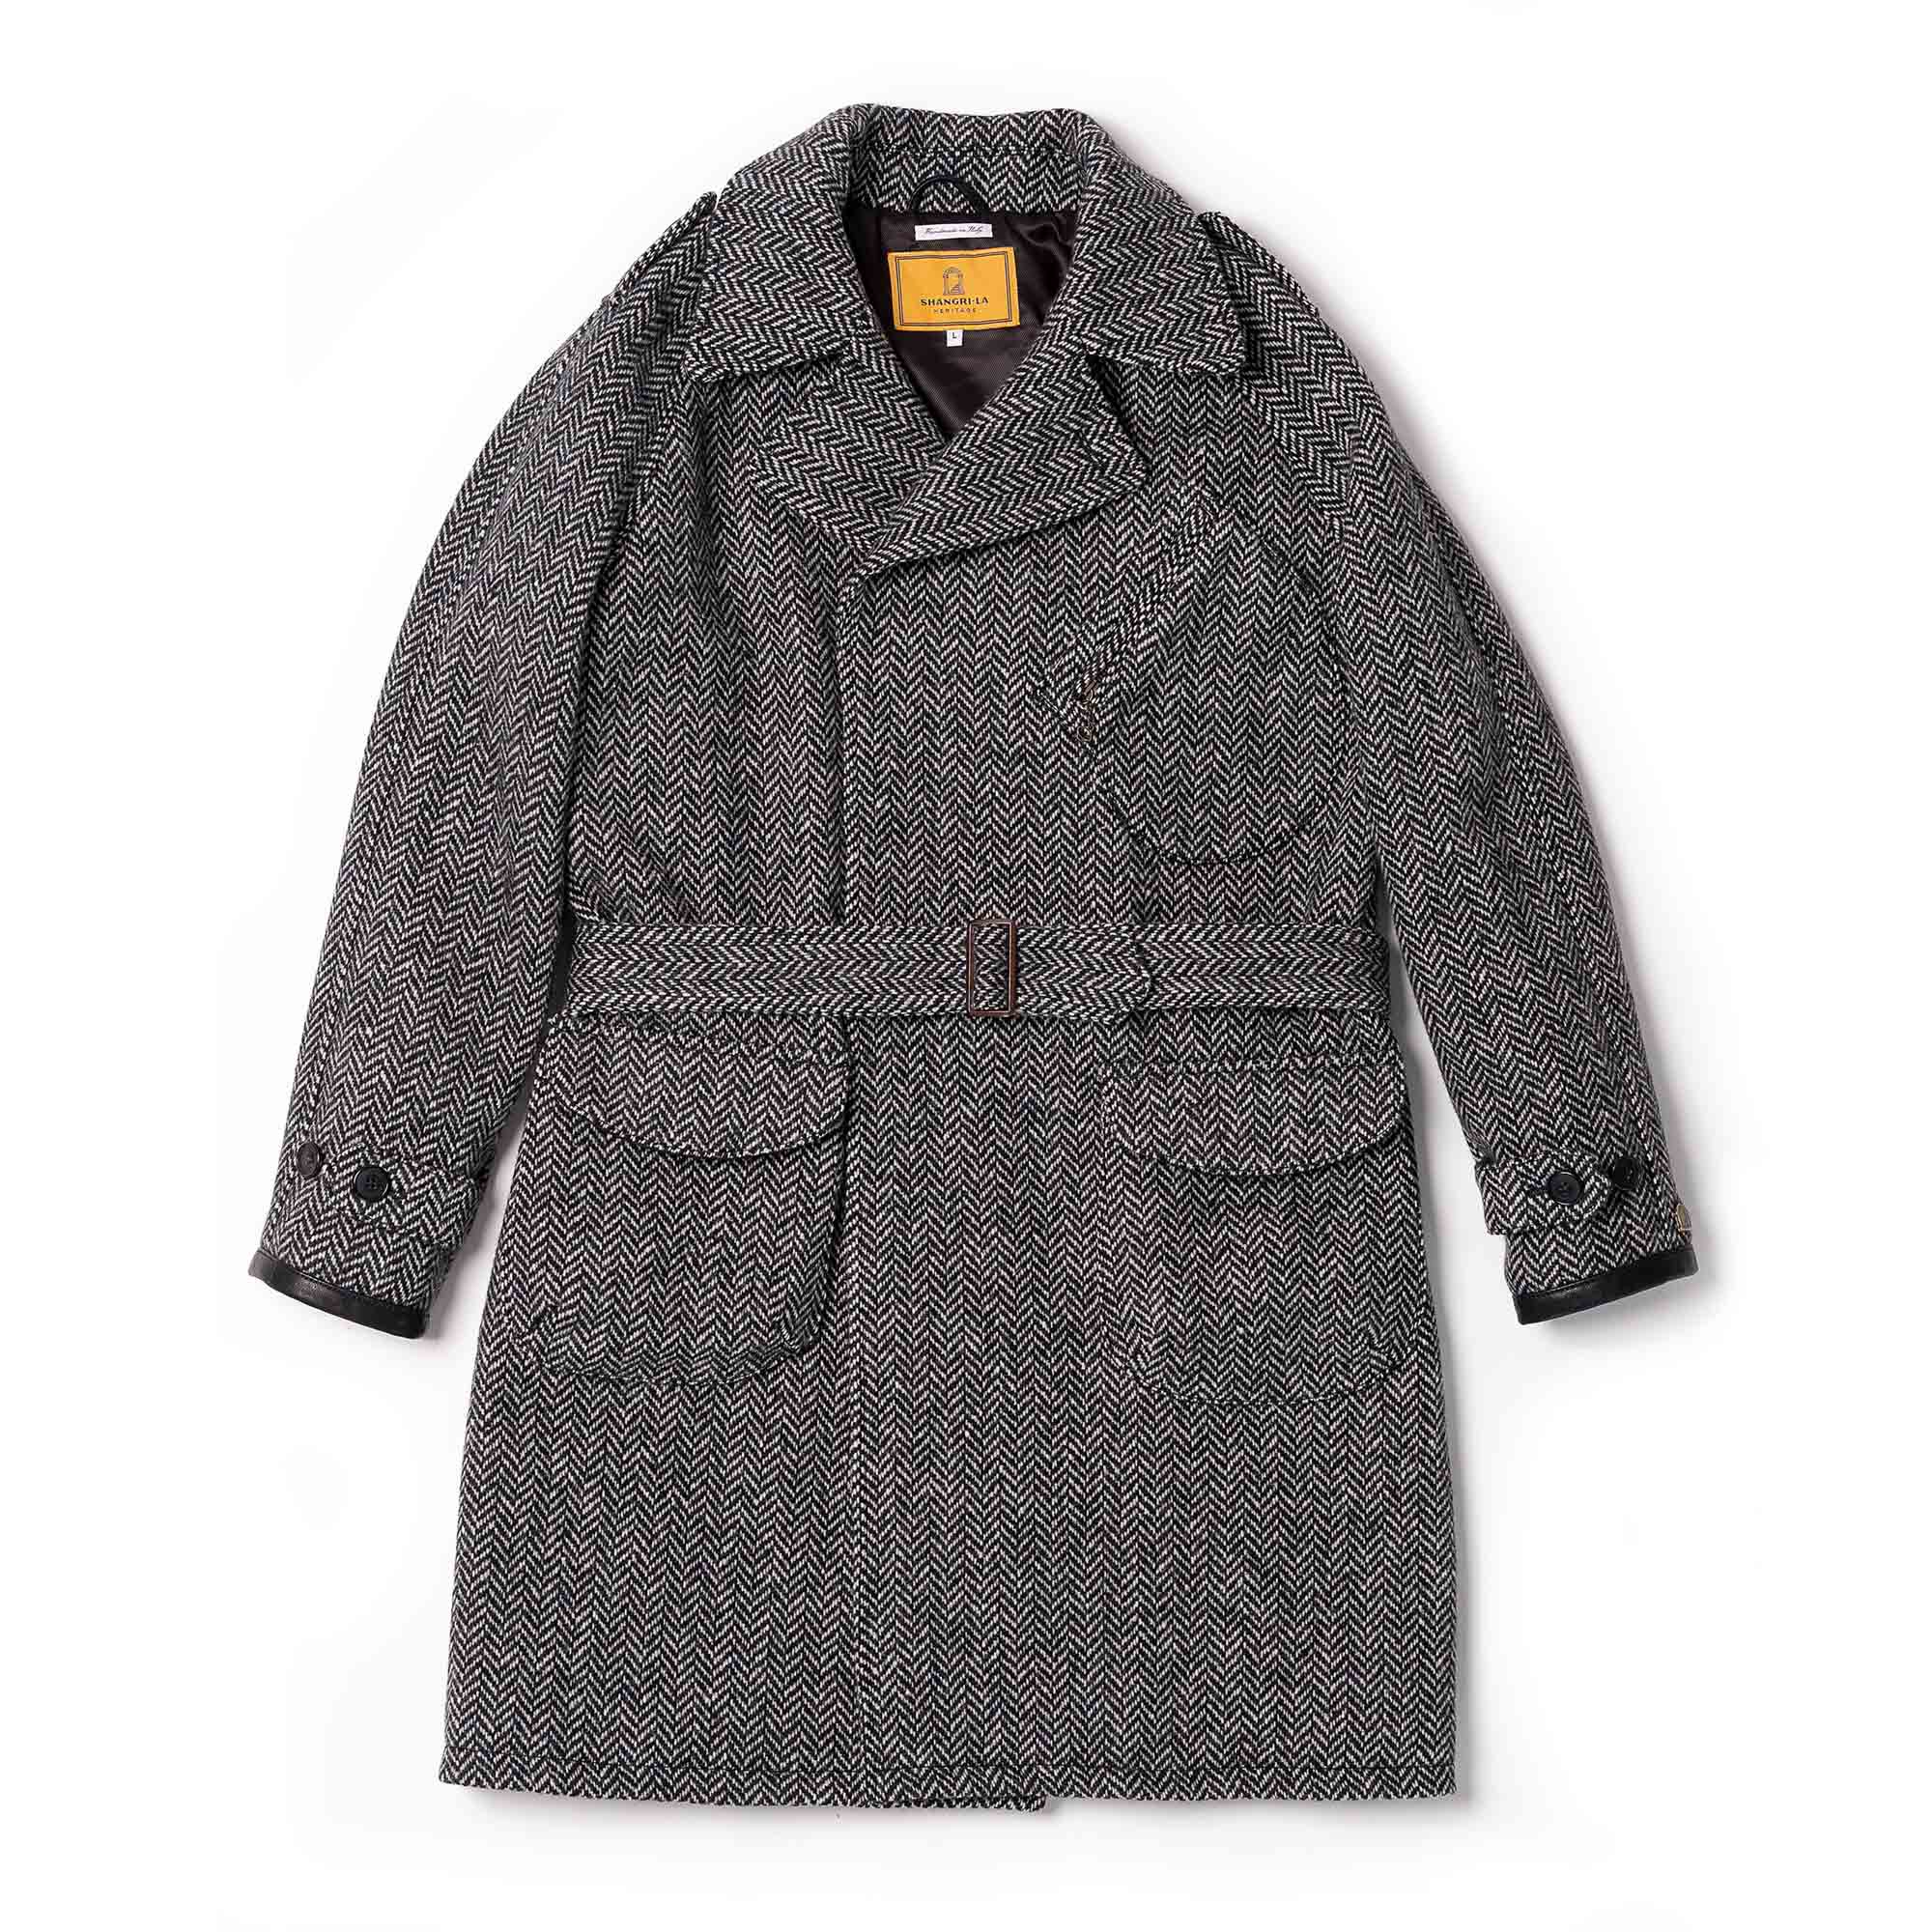 "Stelvio" Grey Herringbone Wool Dispatch Rider Coat